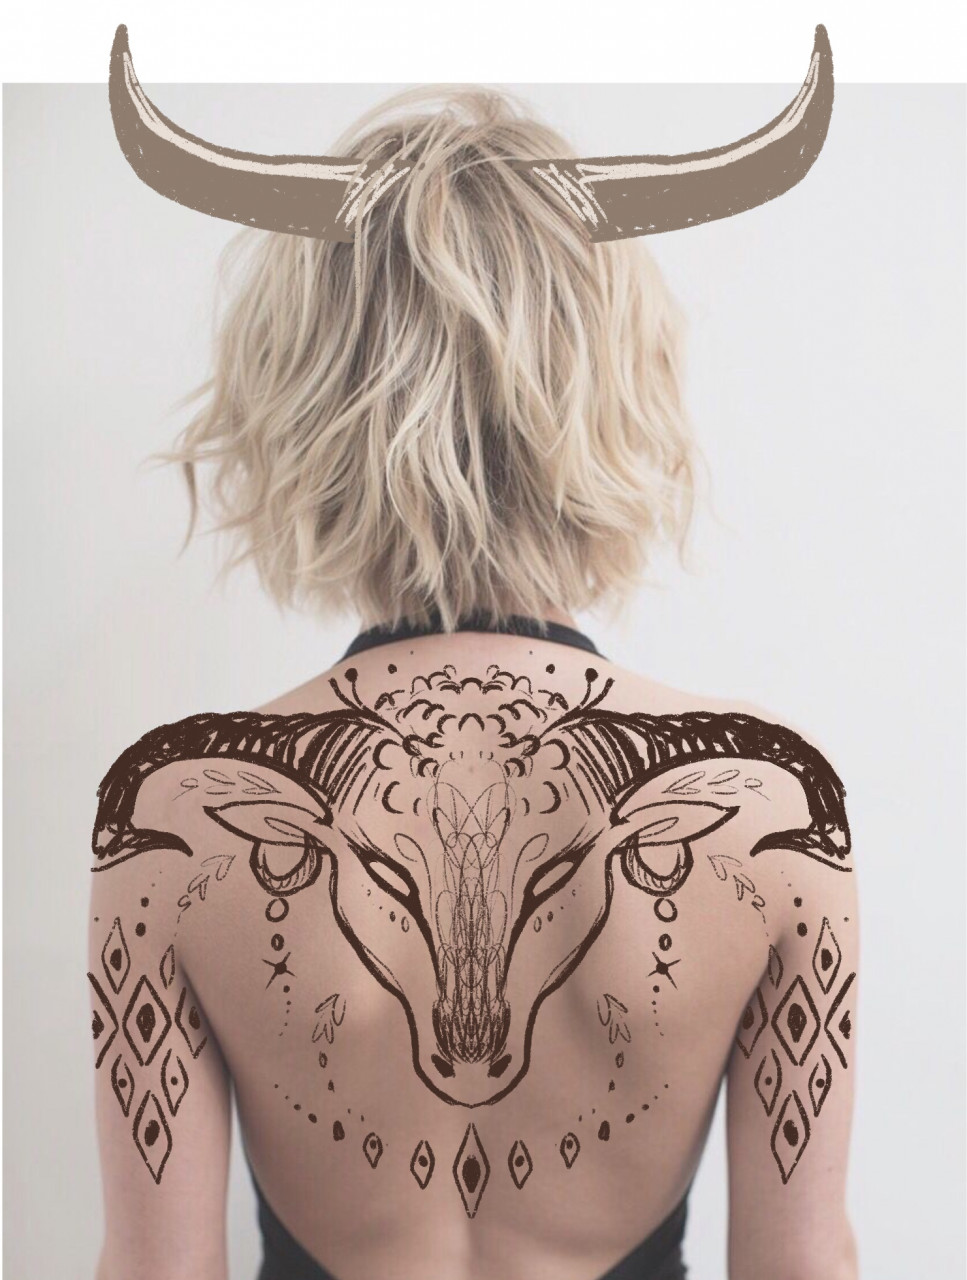 Taurus Tattoos, Tattoo Designs Gallery - Unique Pictures and Ideas